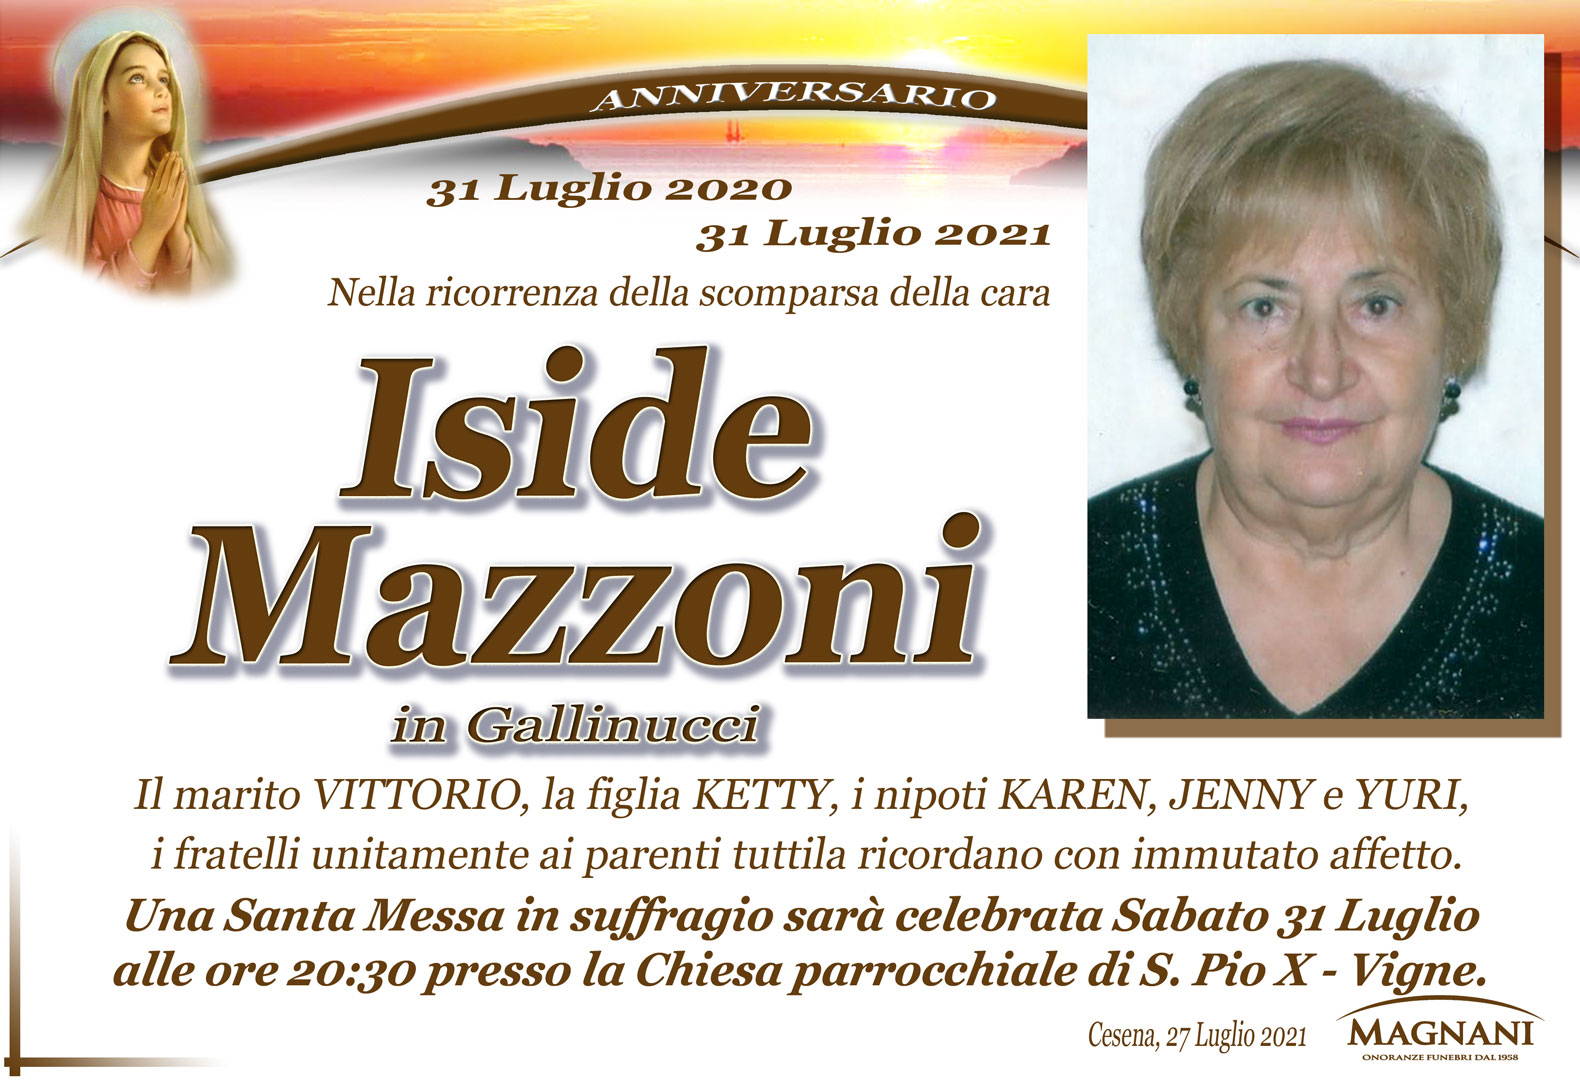 Iside Mazzoni